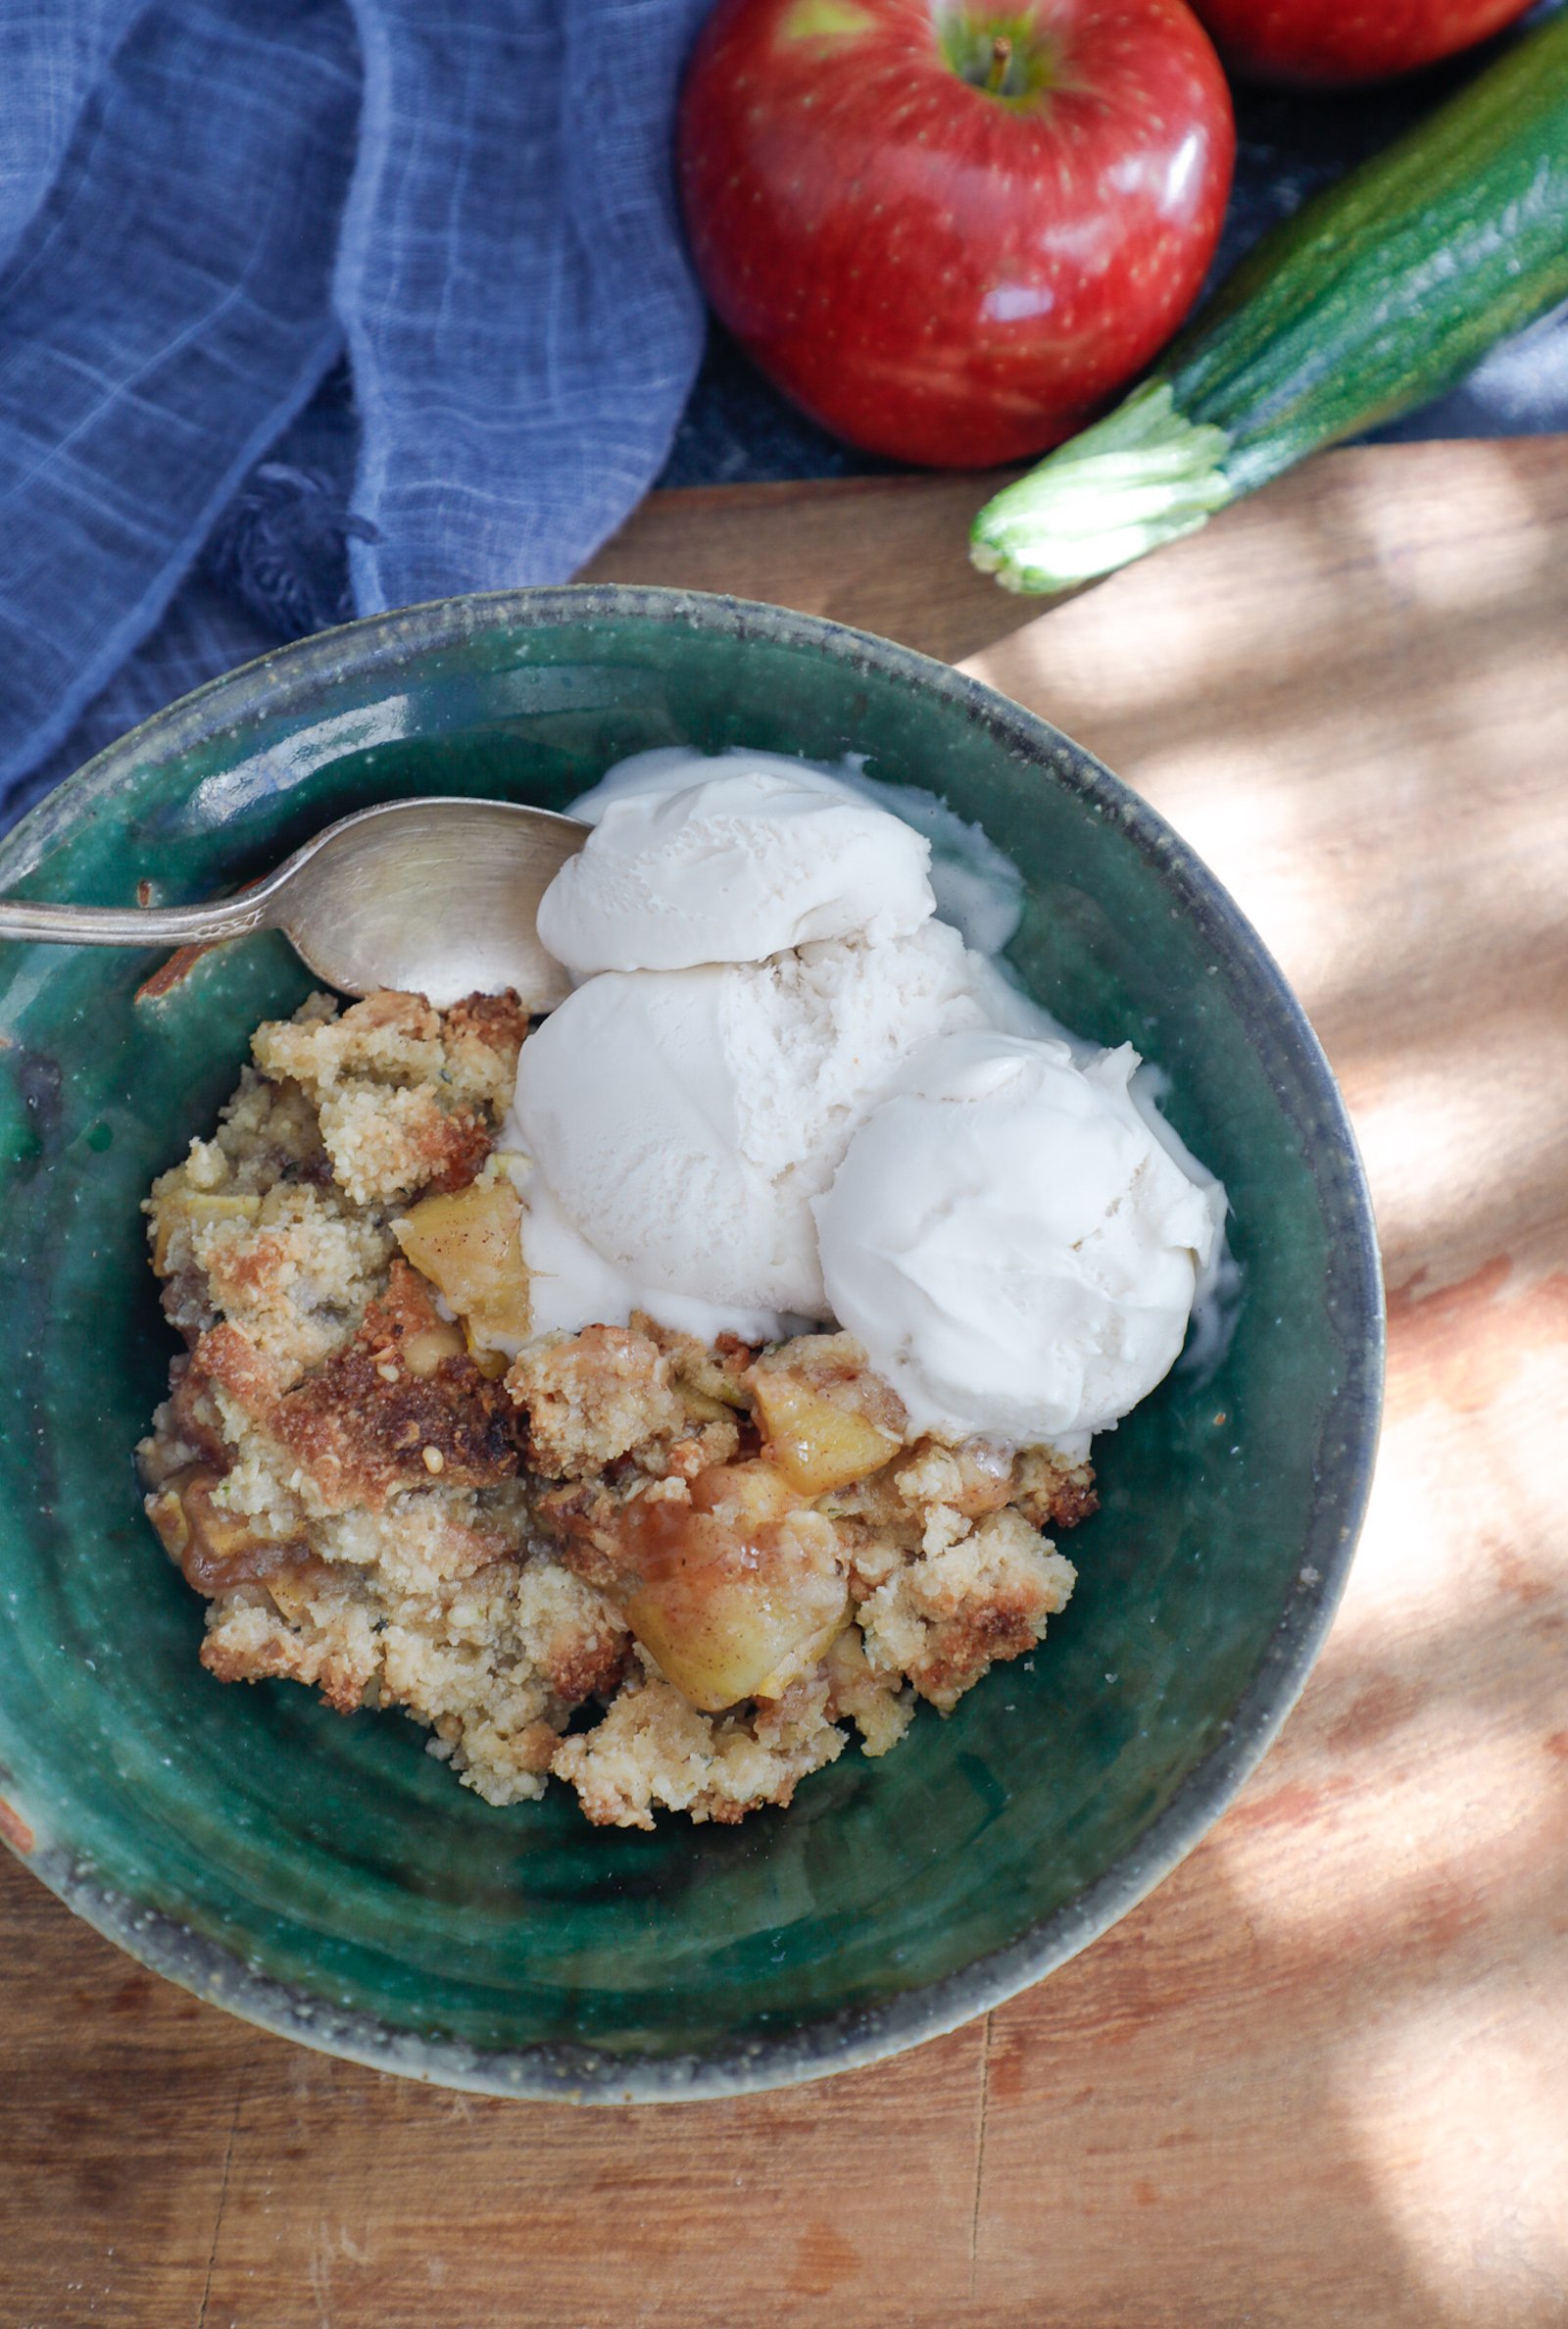 Keto Apple Crisp with sugar free vanilla ice cream on top